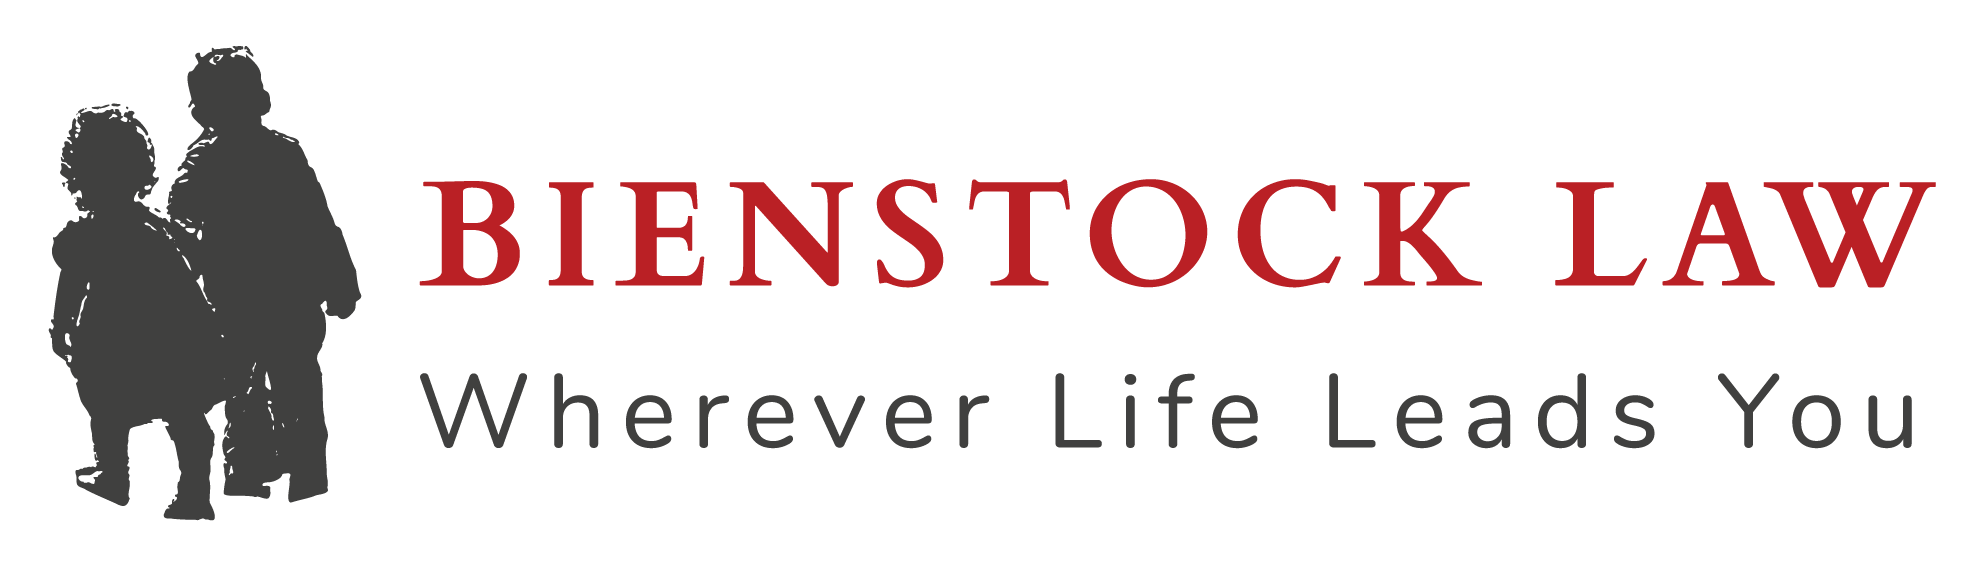 bienstock law logo